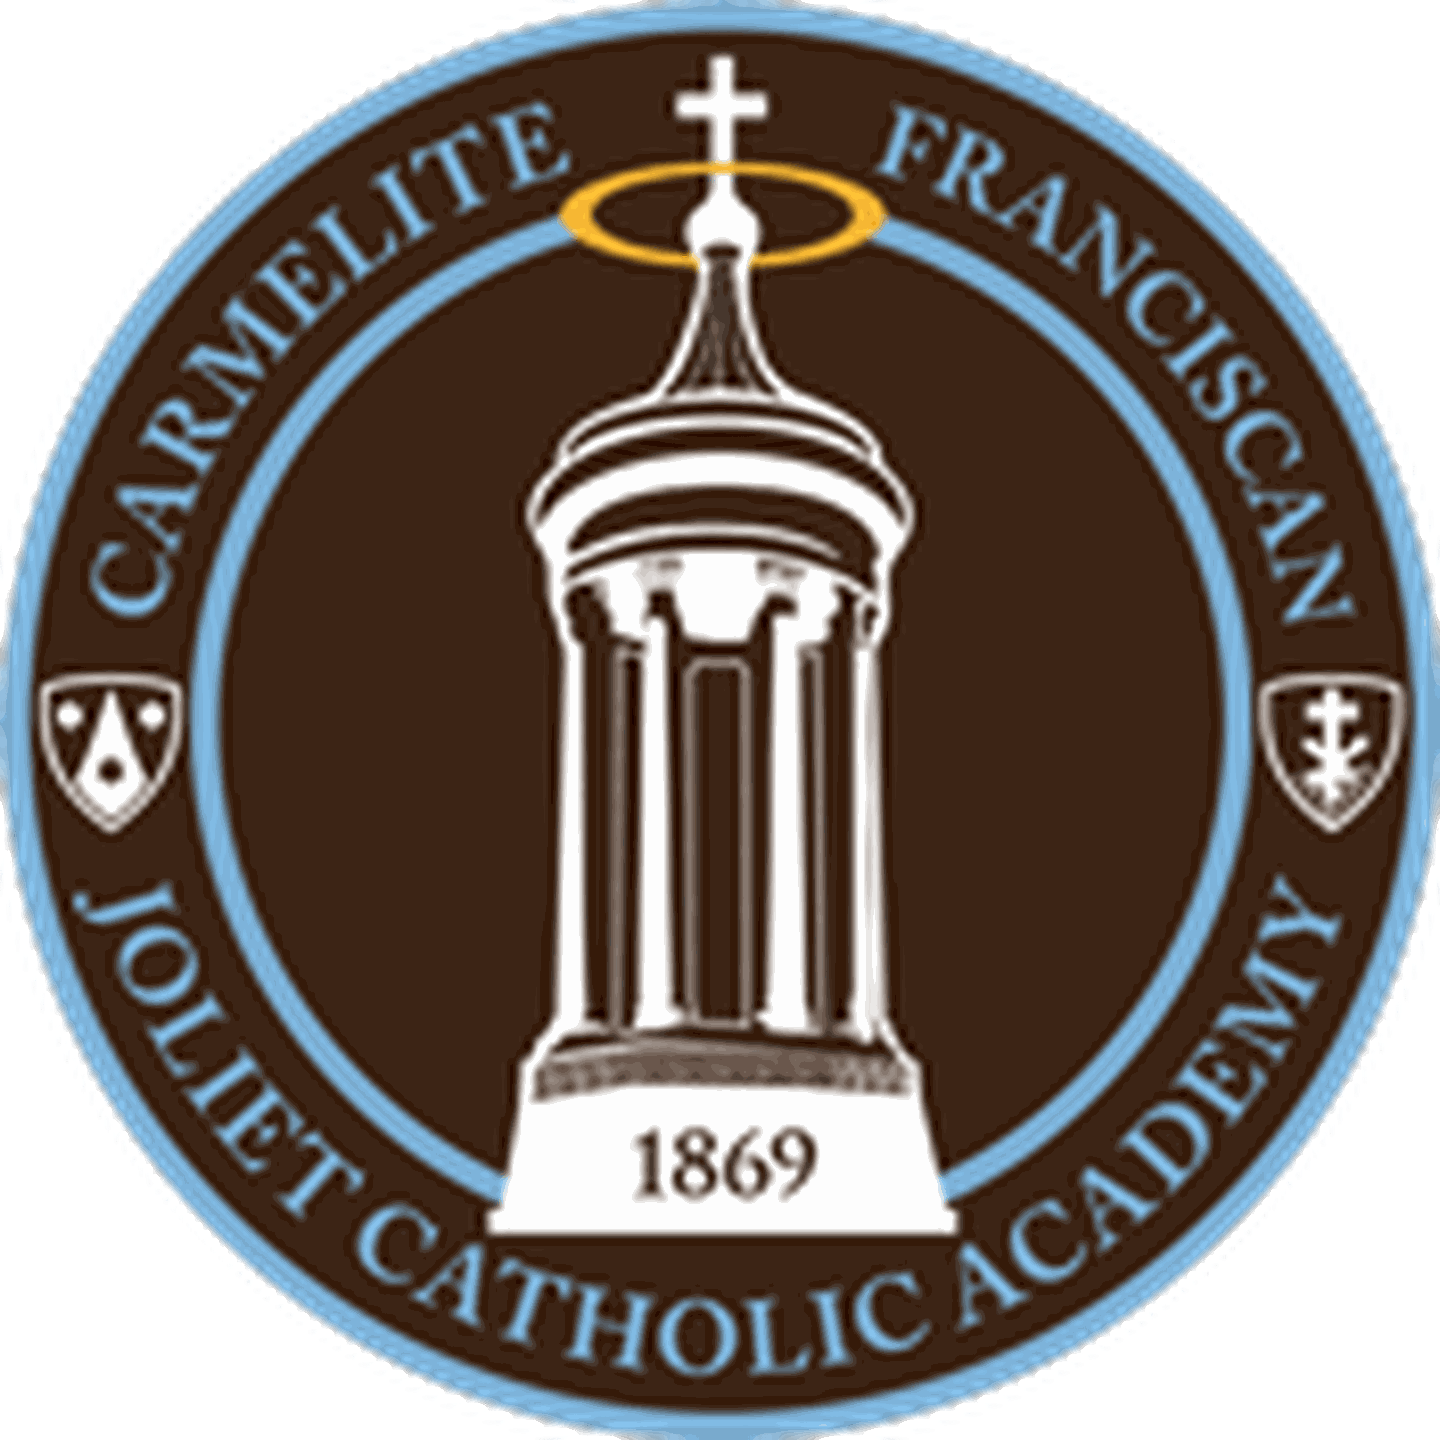 Joliet Catholic logo